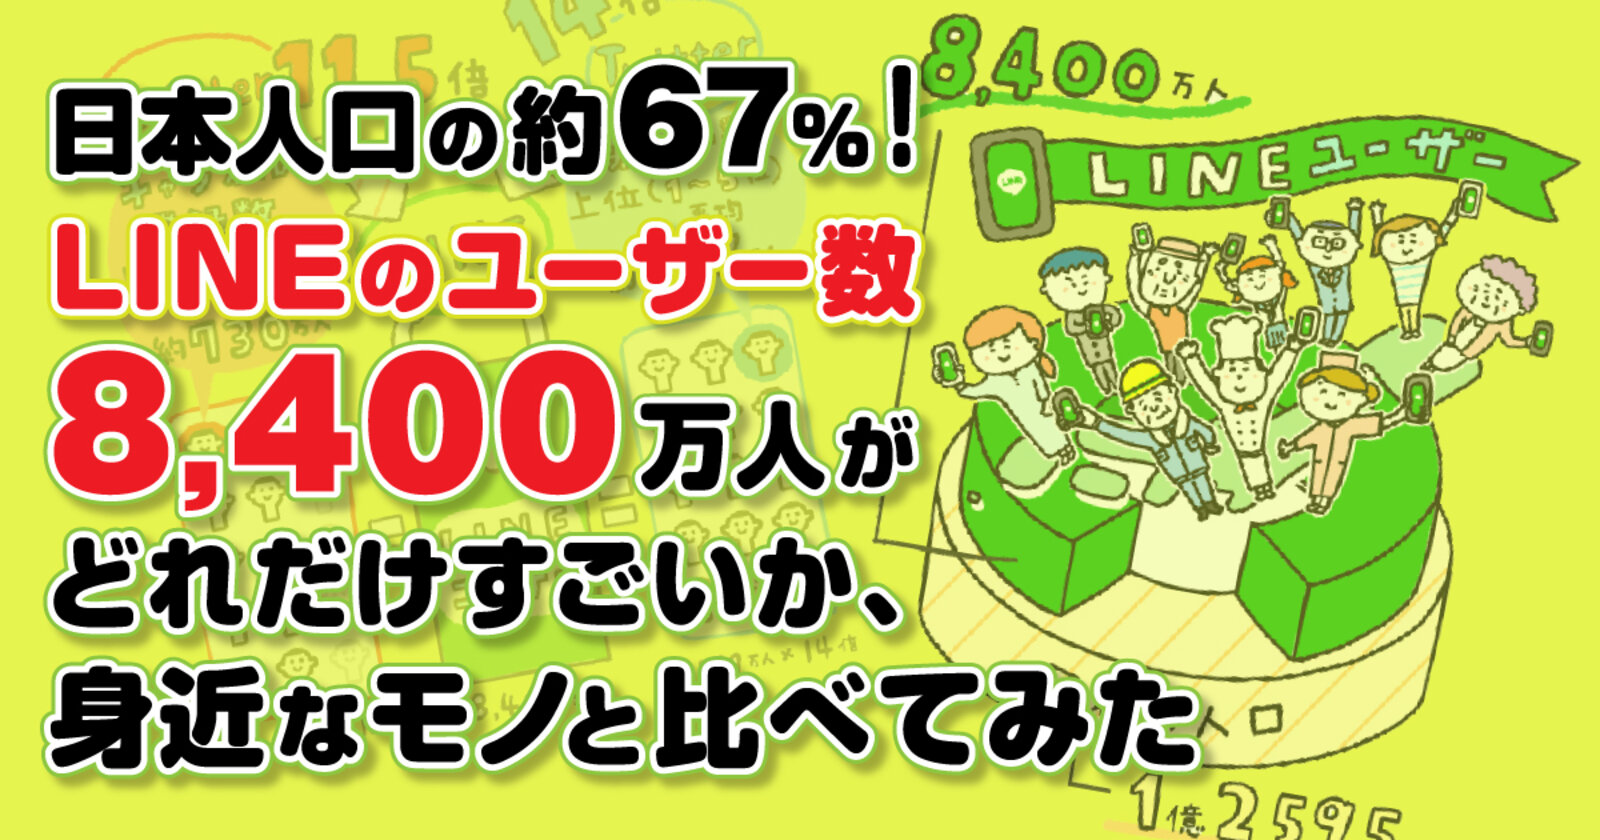 Lineの利用者 普及率は 他snsユーザー数や人口と比べた Web担当者forum